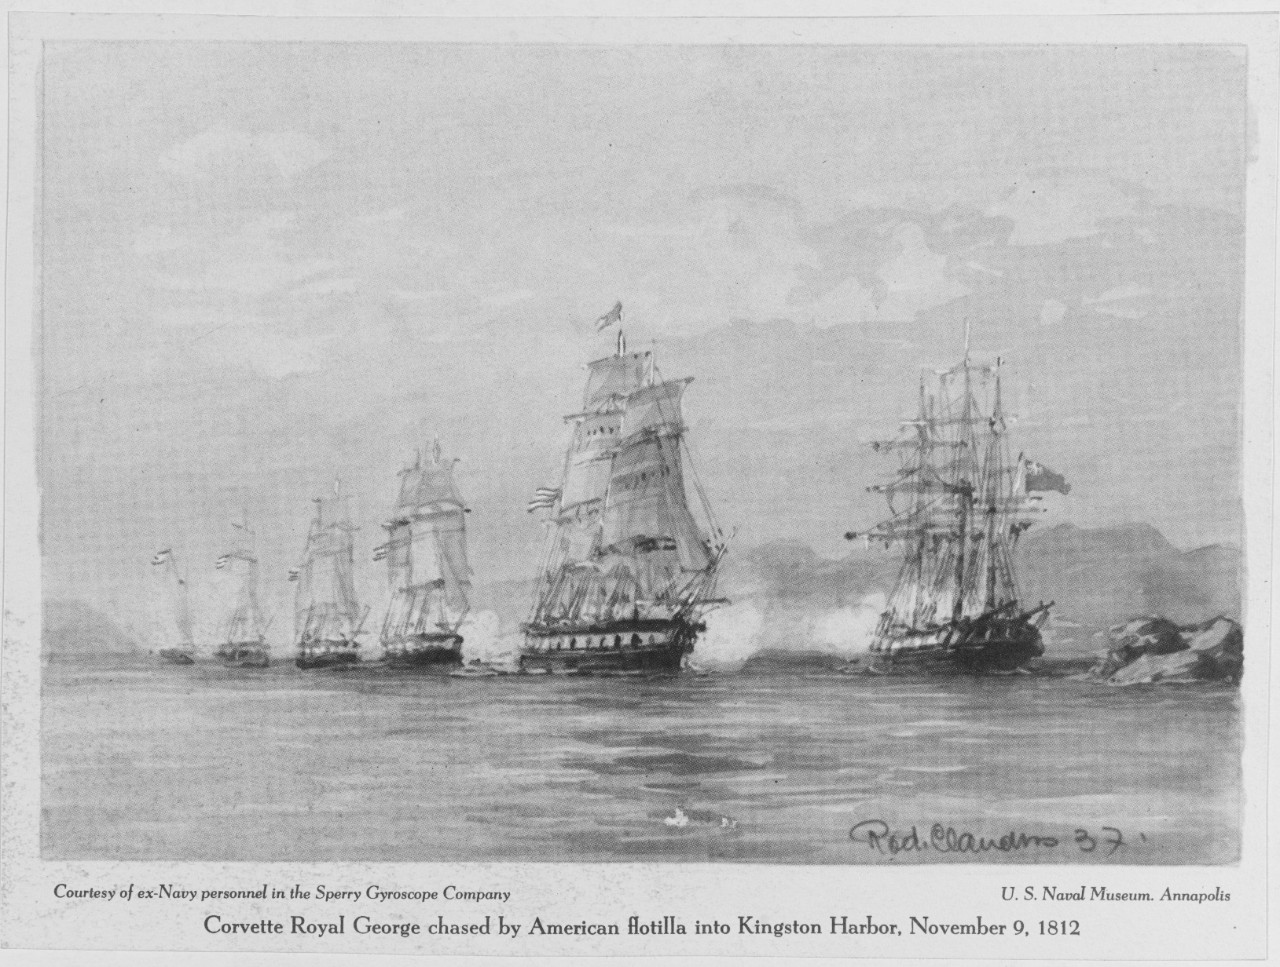 Corvette HMS ROYAL GEORGE Chased by American Flotilla into Kingston Harbor, 9 November 1812